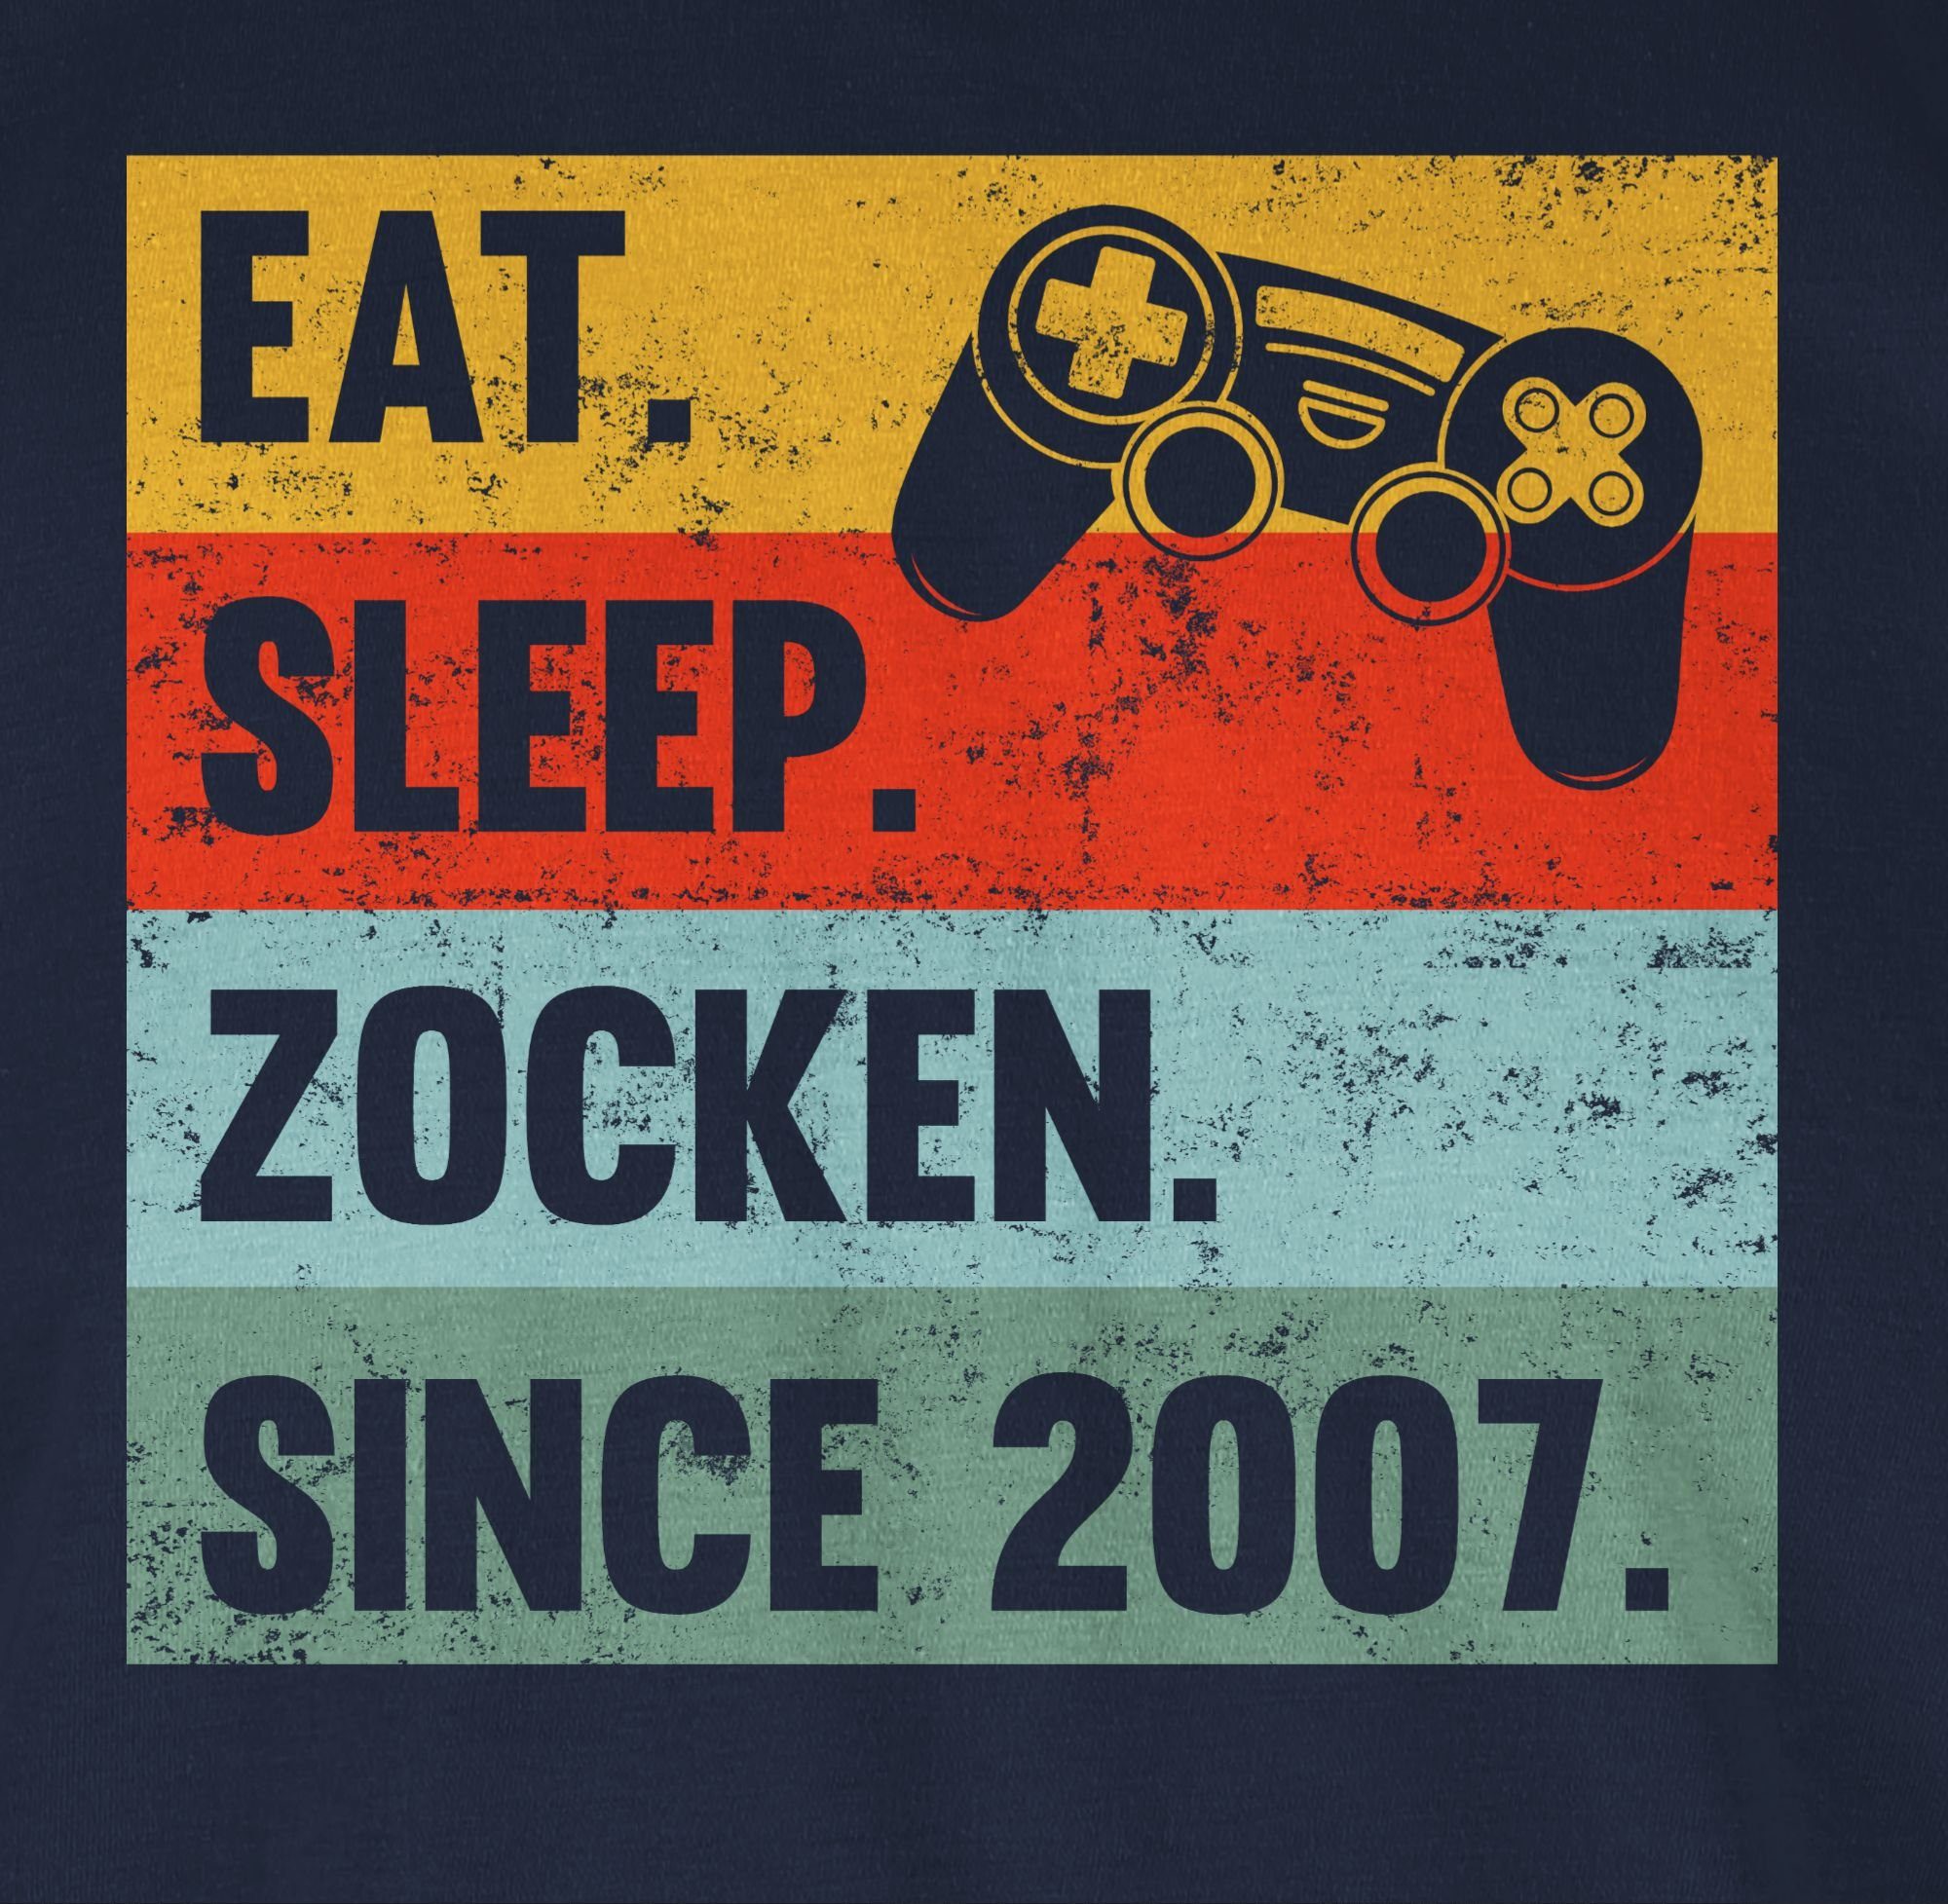 Navy Zocken 2007 16. 03 Sleep Eat T-Shirt Blau Shirtracer Since Geburtstag